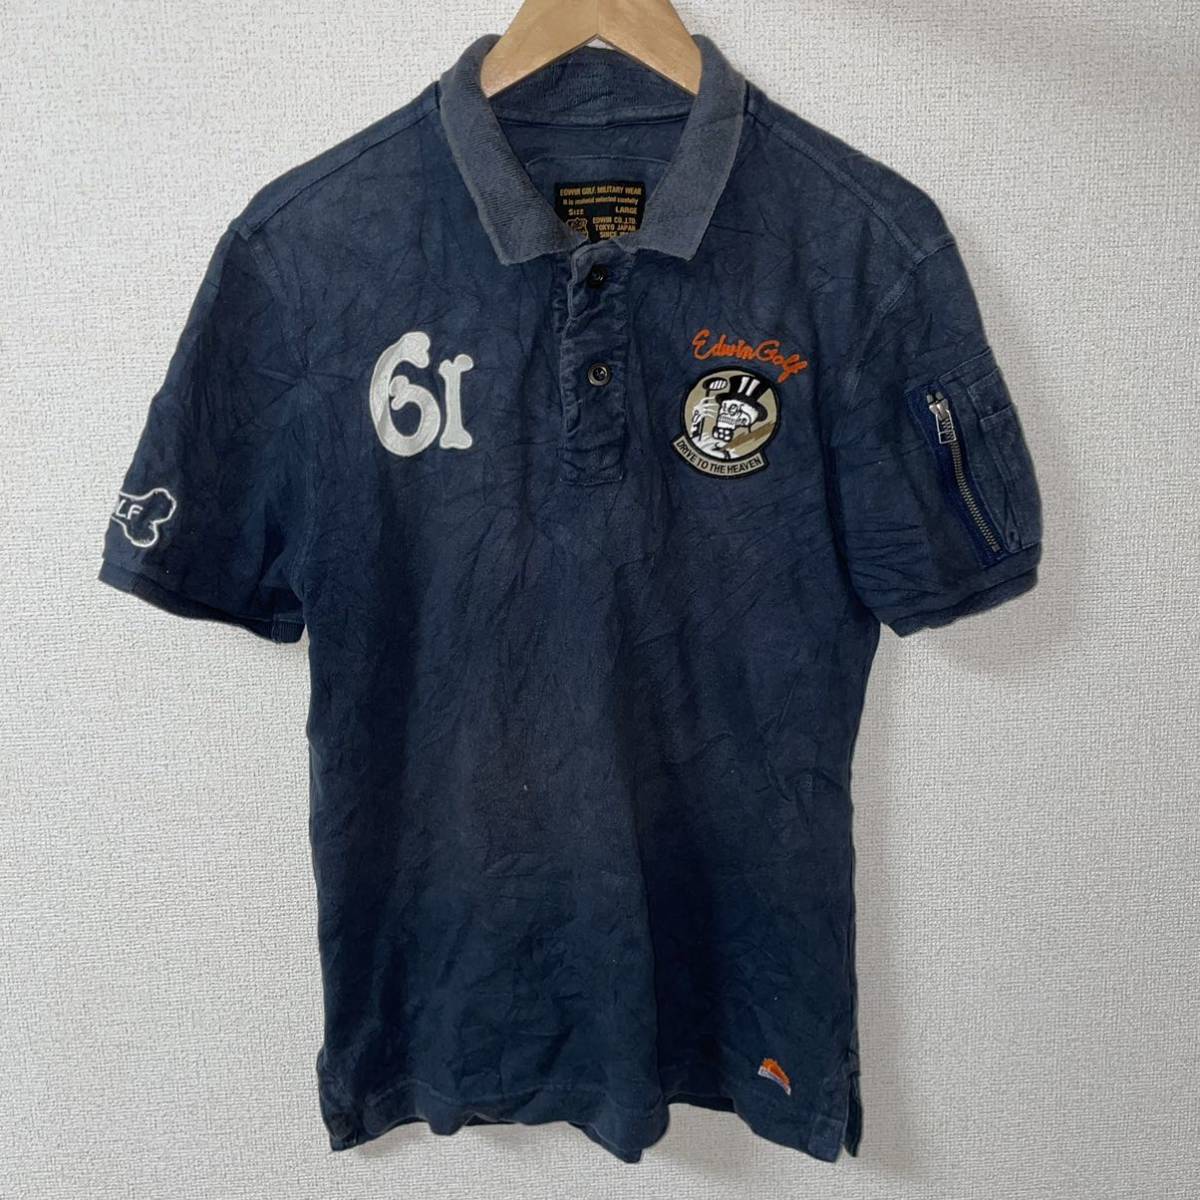 EDWIN Edwin golf Golf polo-shirt short sleeves old clothes navy blue sport men's L